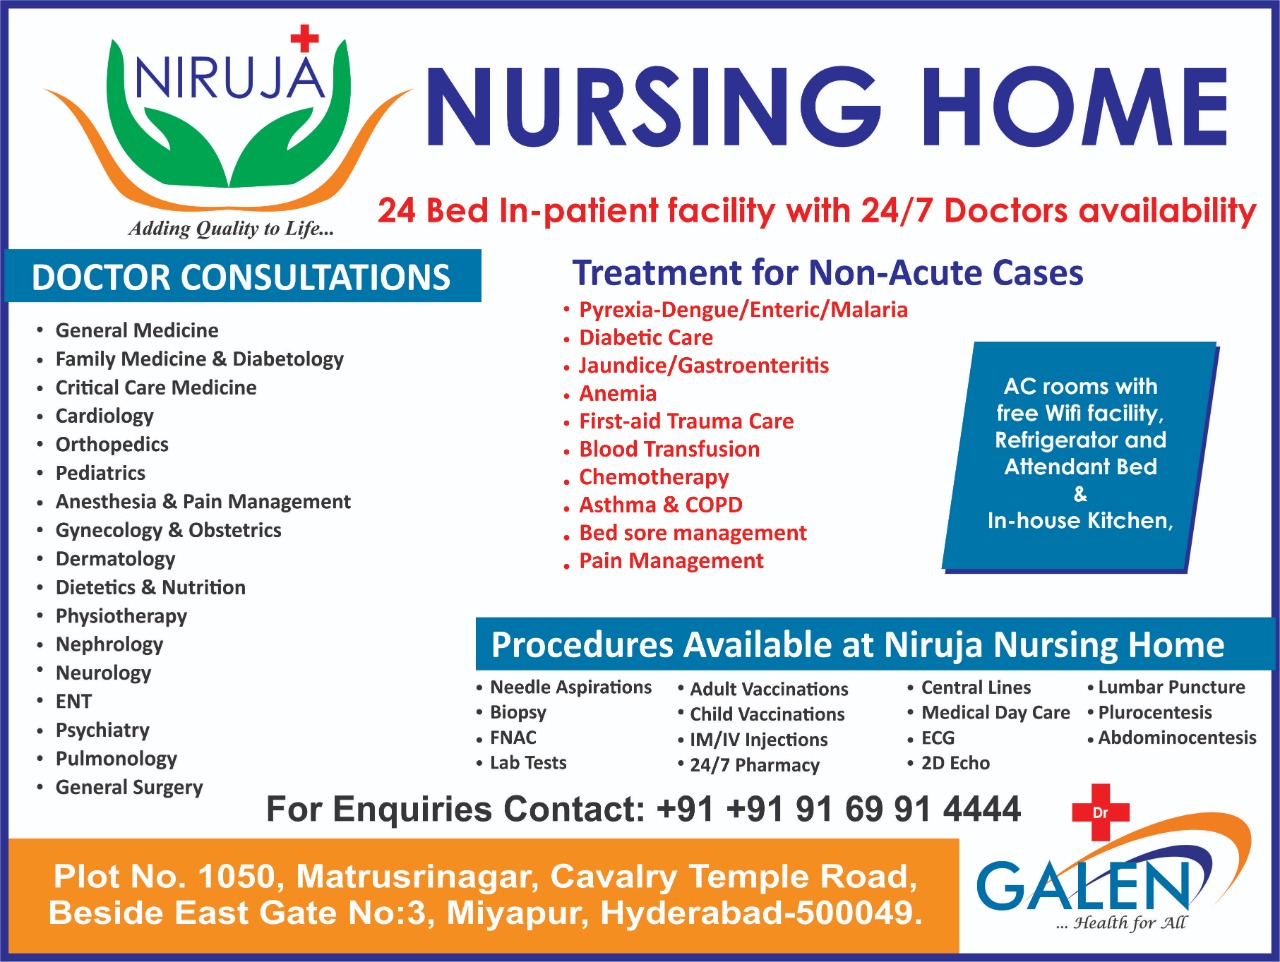 Nursing Home - Procedures